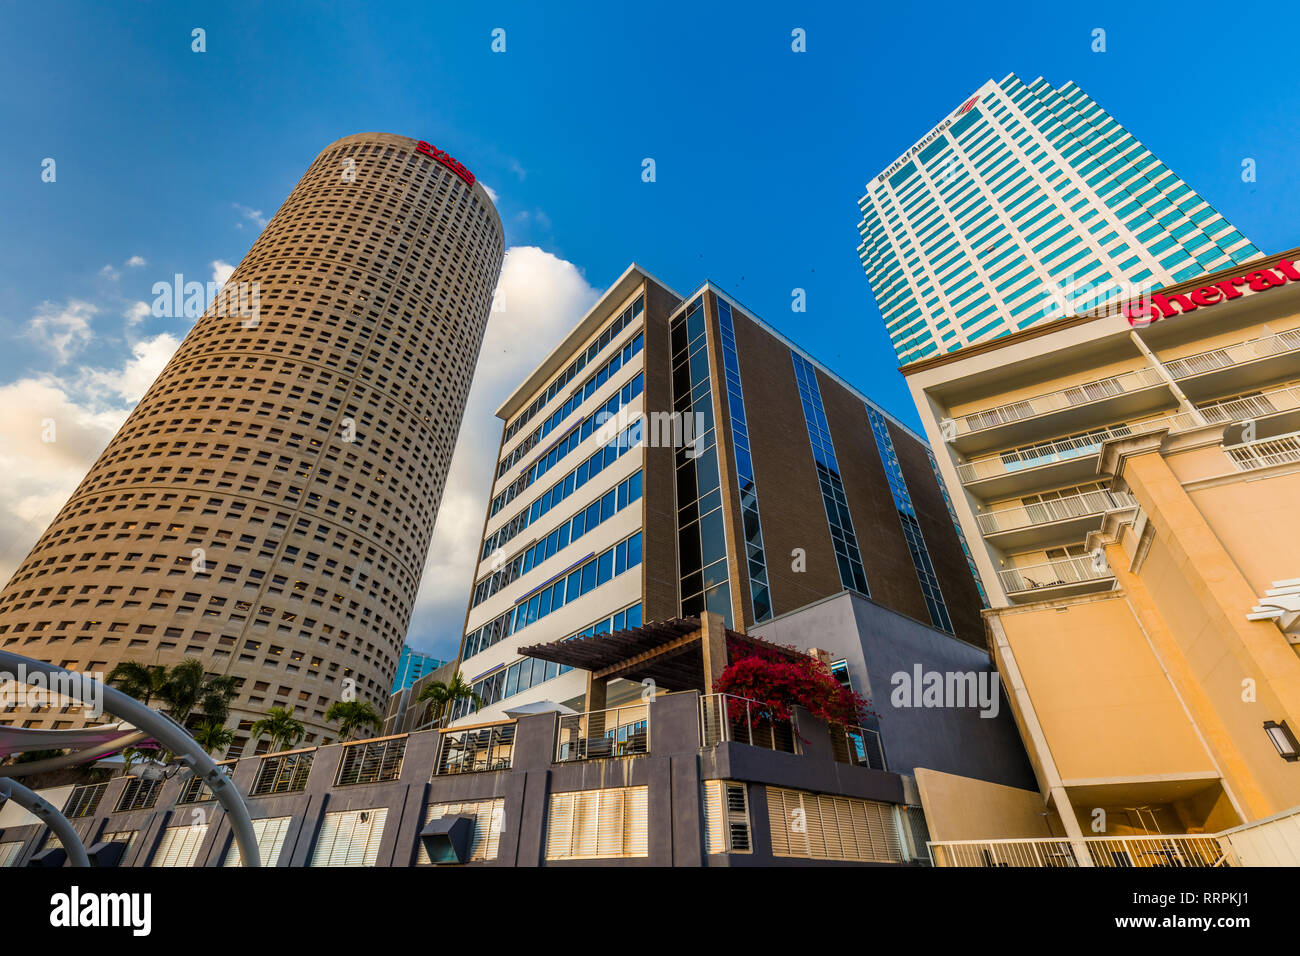 Downtown tampa fotografías e imágenes de alta resolución - Alamy